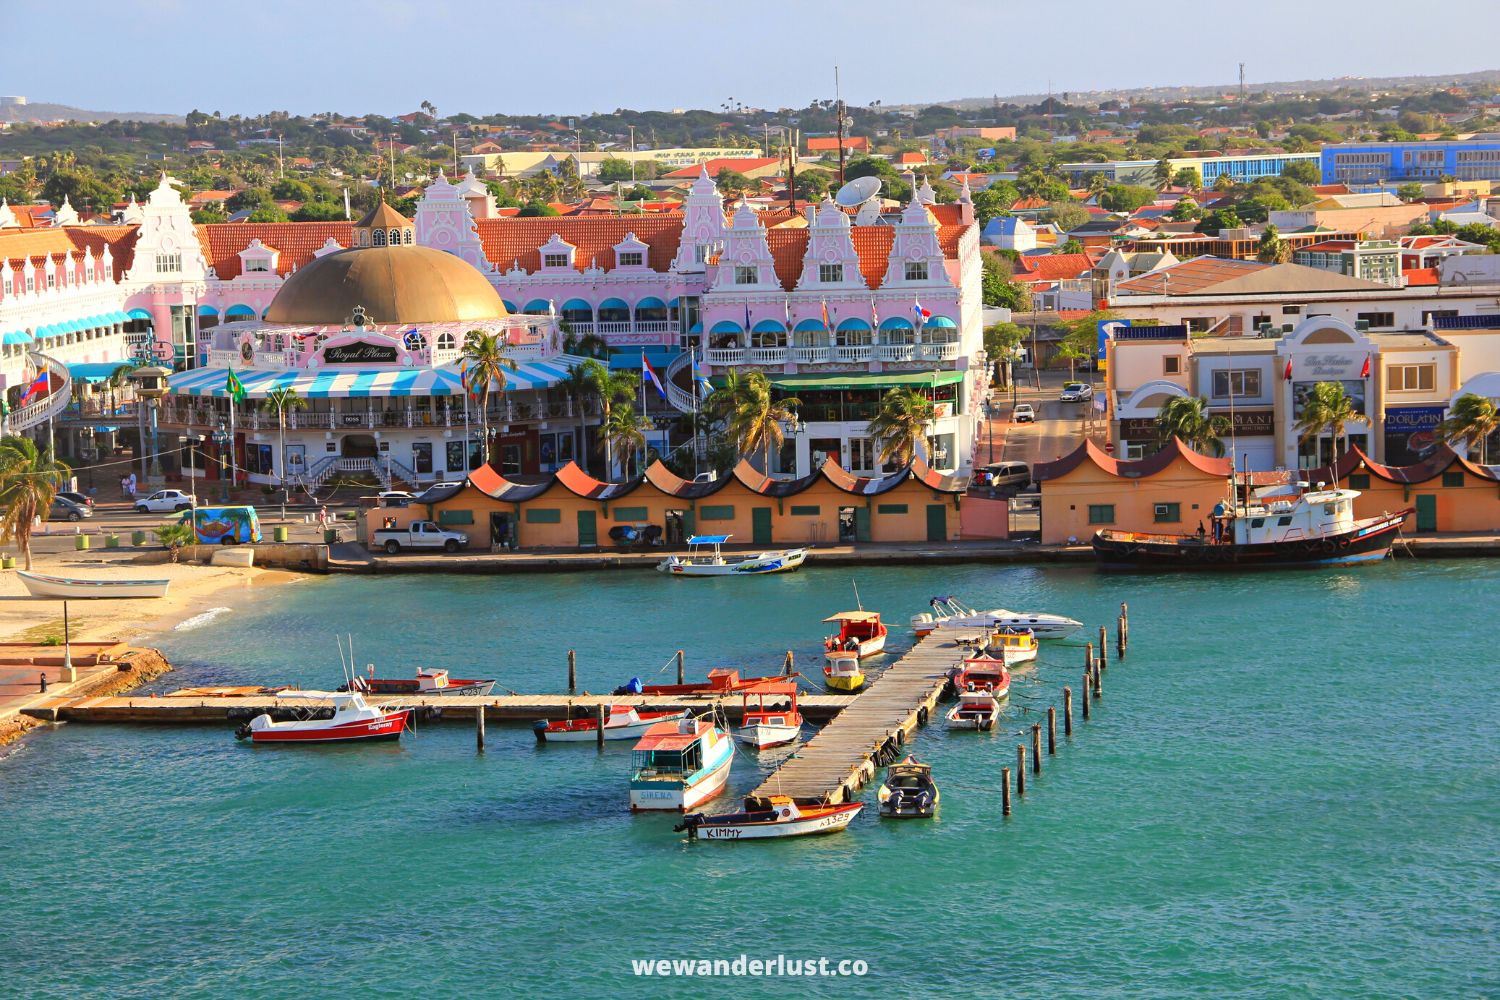 Natural Scenery & Attractions in Aruba